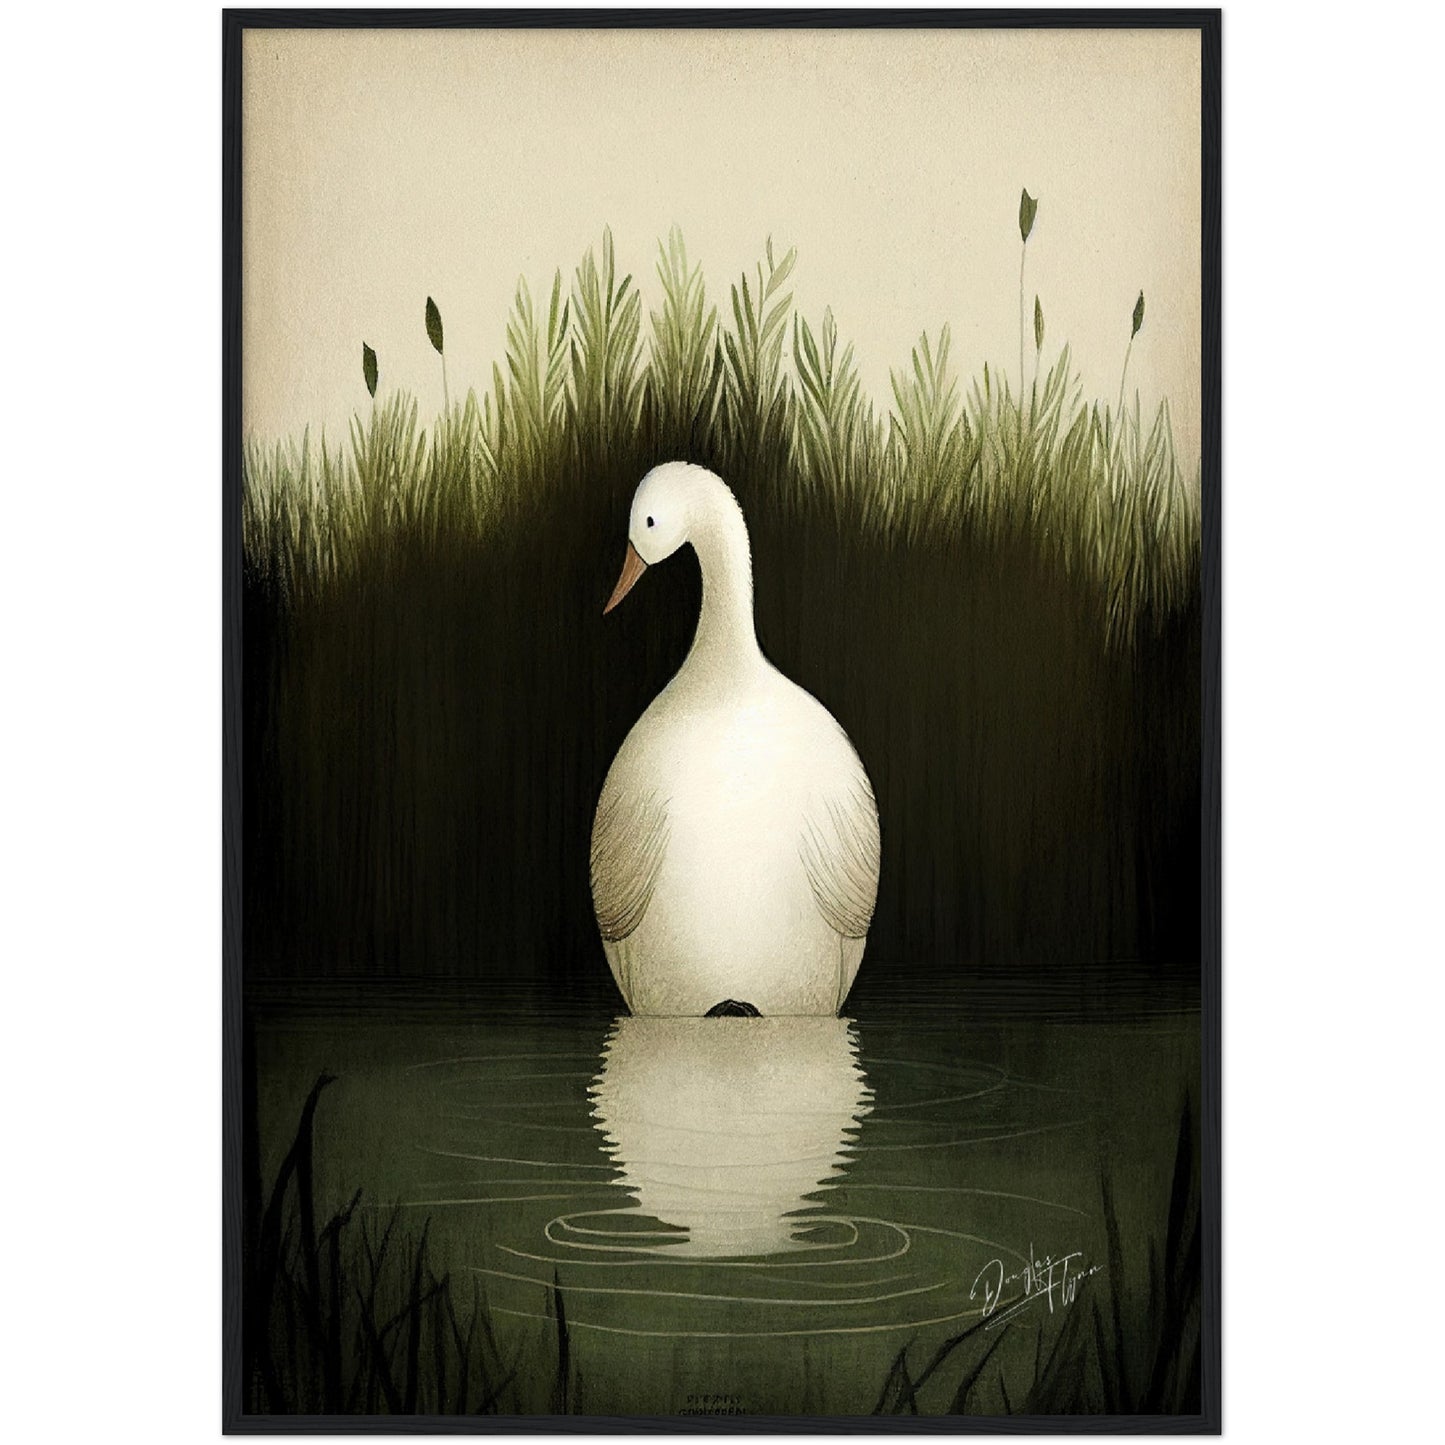 »Duck Listen And Reflect« retro poster